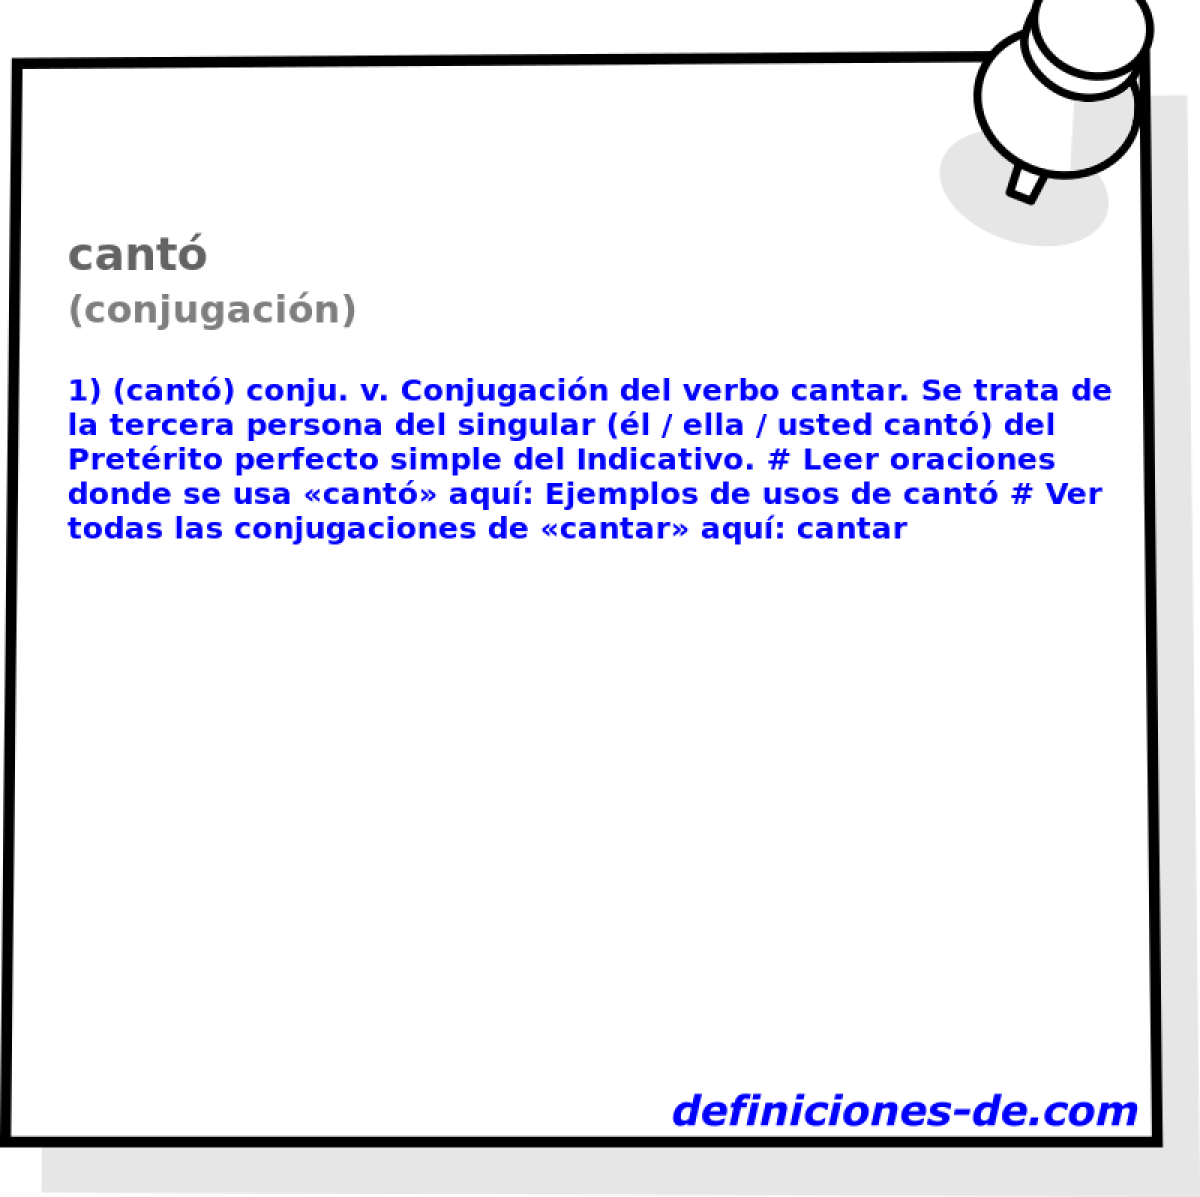 cant (conjugacin)